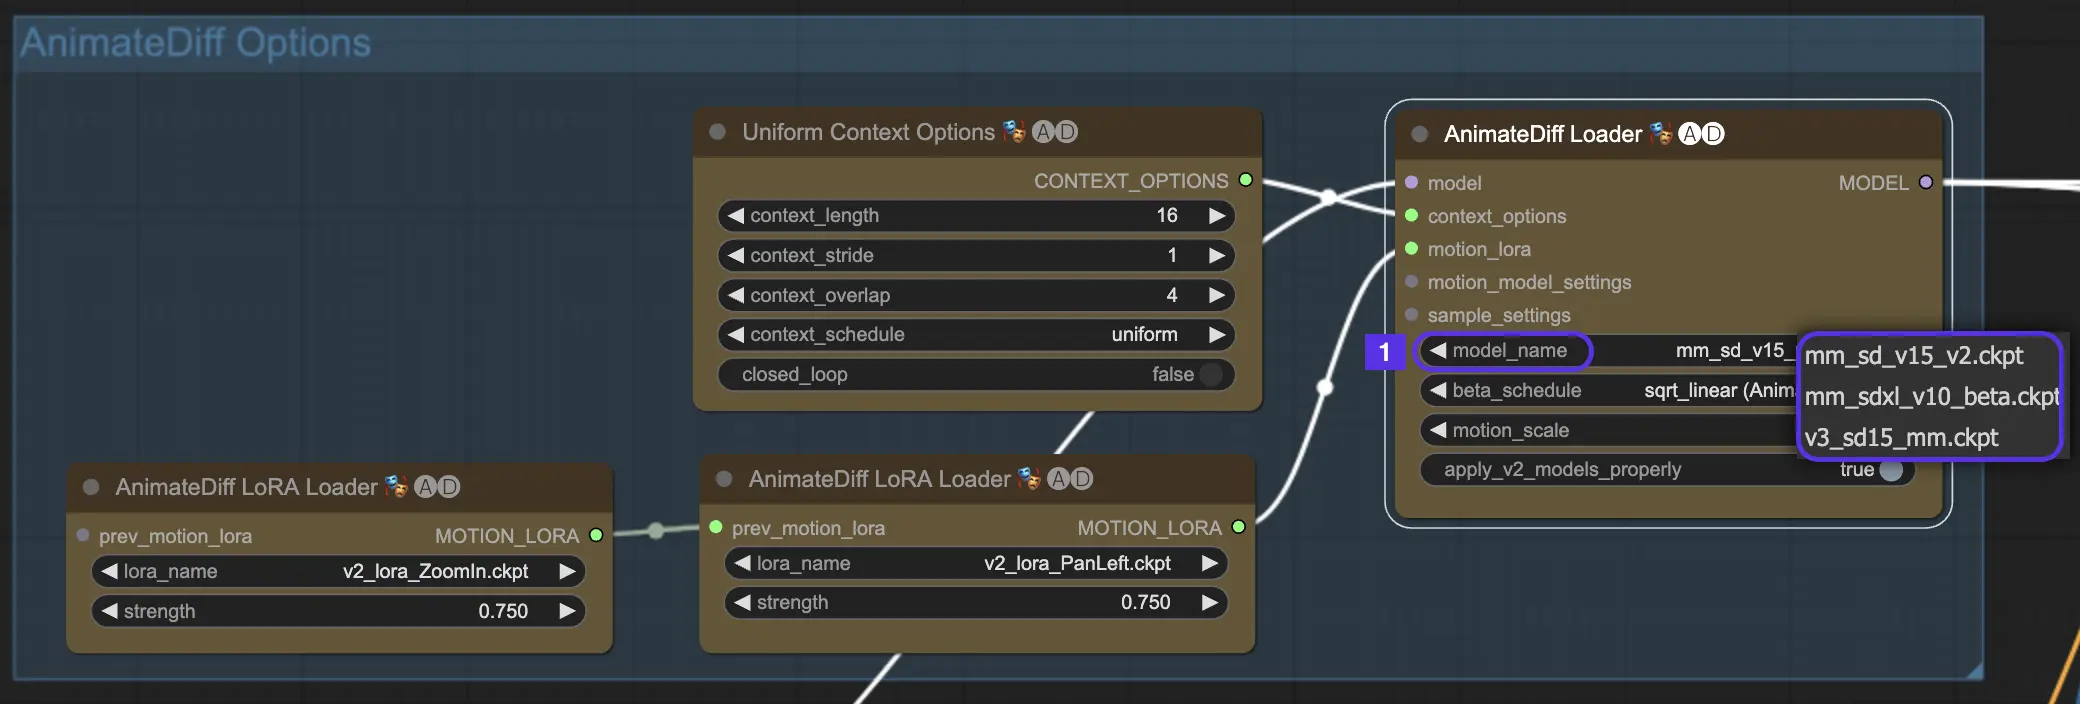 ComfyUI의 다양한 버전에서 AnimateDiff 모션 모듈